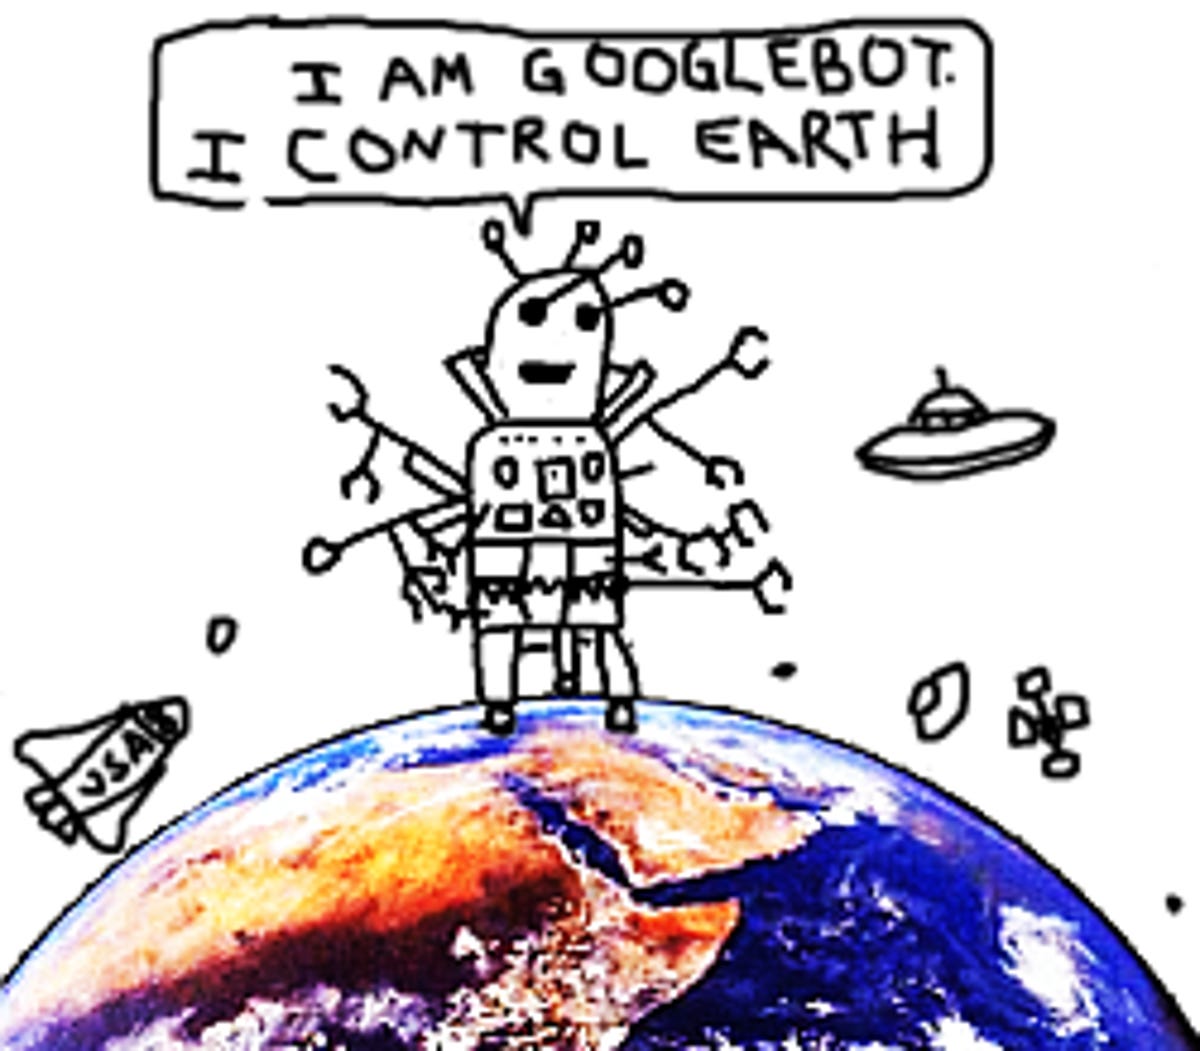 googlebot_earth_paul_ford.png